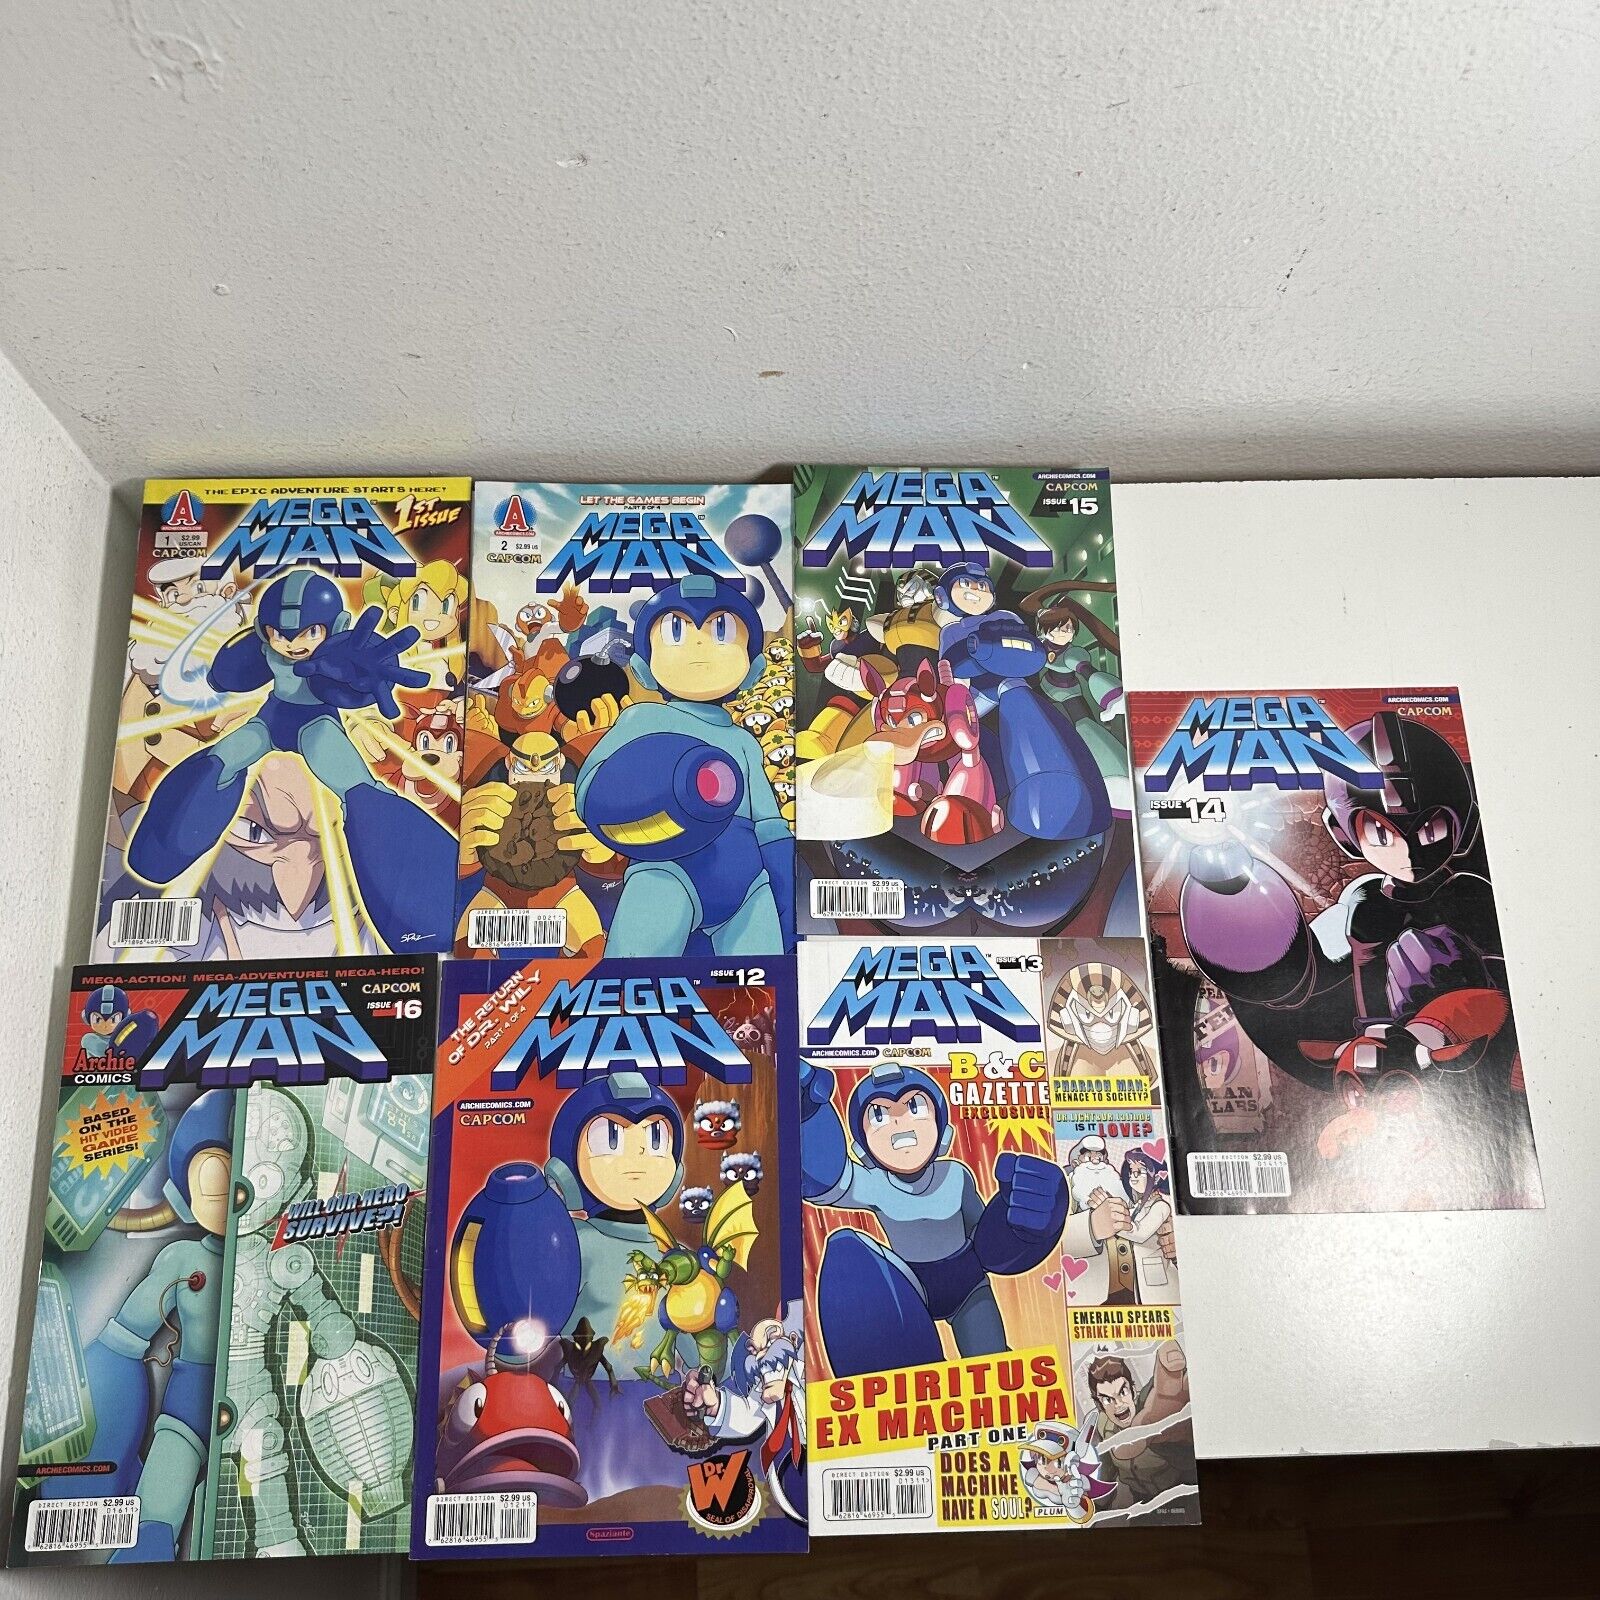 Mega Man Archie Comics Capcom Issue #1-2, #12-16 Comic Books - Lot of 7